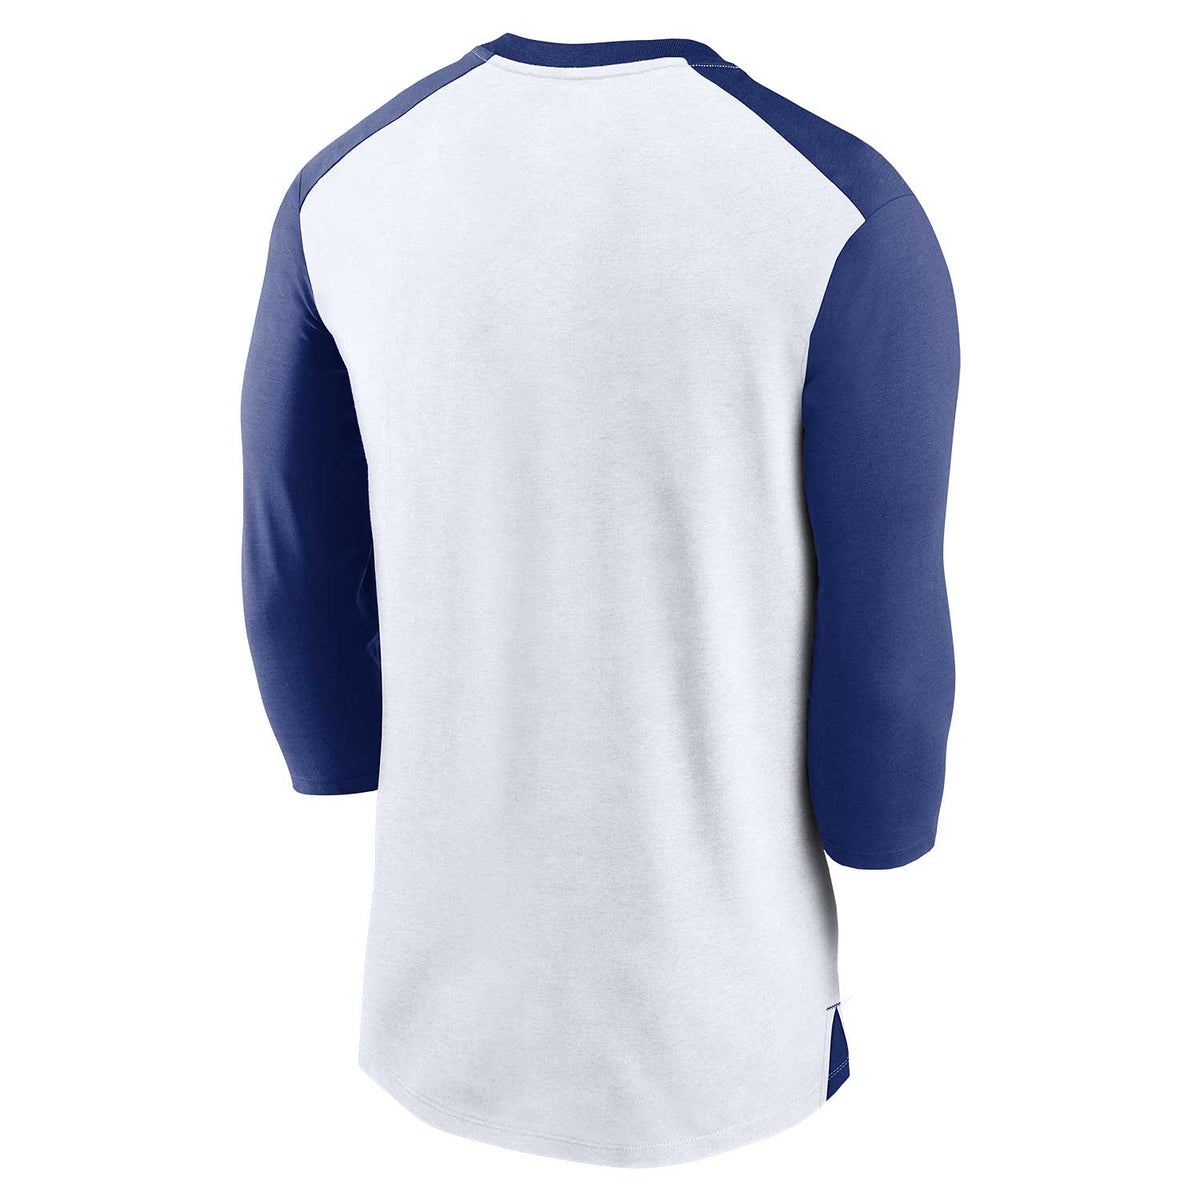 The Nike Tee Toronto Blue Jays Men's Blue T-Shirt Size Small 3/4